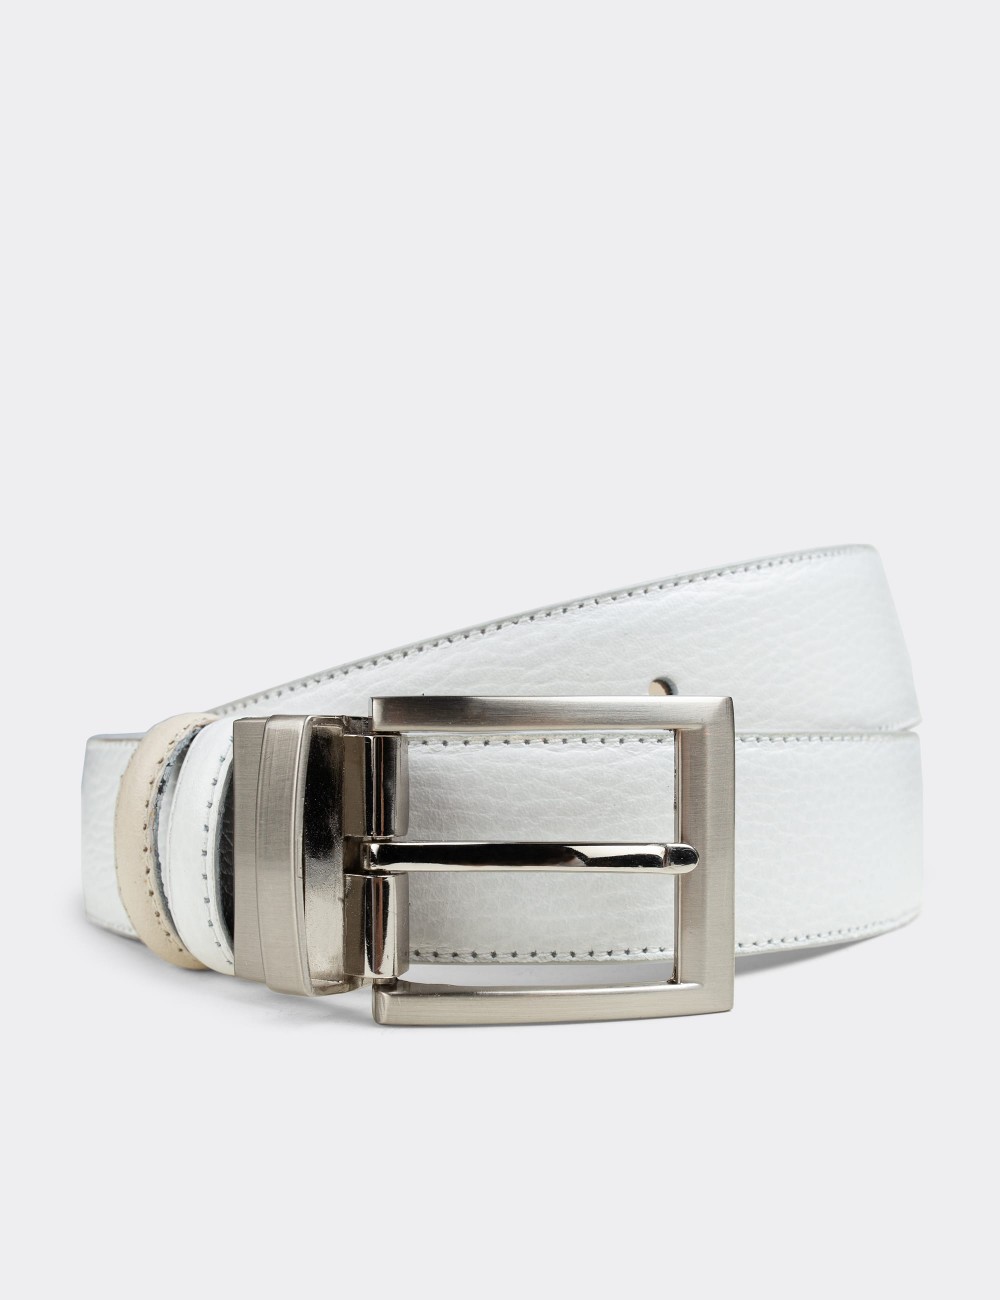  Leather White and Beige Double Sided Men's Belt - K0408MBYZW01